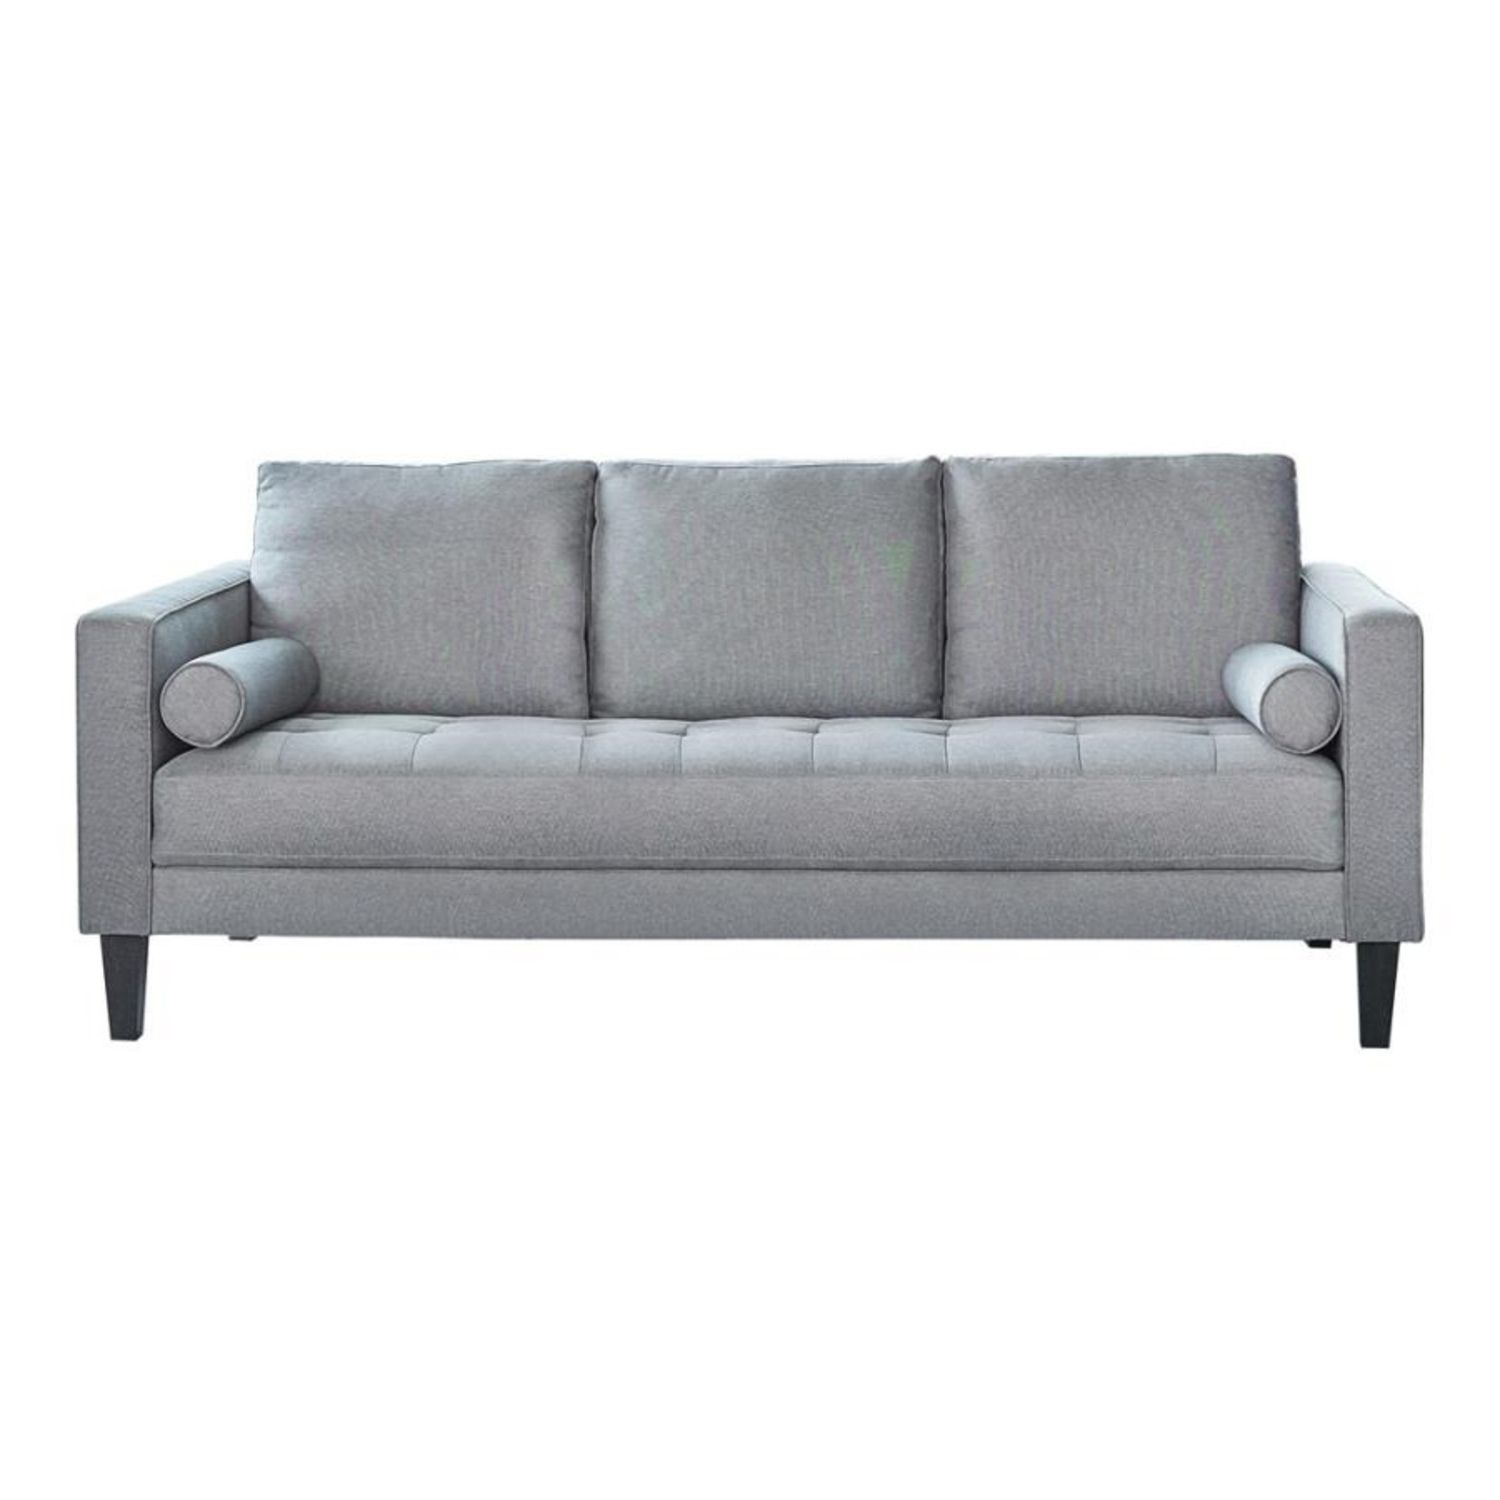 Trendy Modern Sofa In Linen Like Charcoal Upholstery – Aptdeco With Light Charcoal Linen Sofas (Photo 10 of 15)